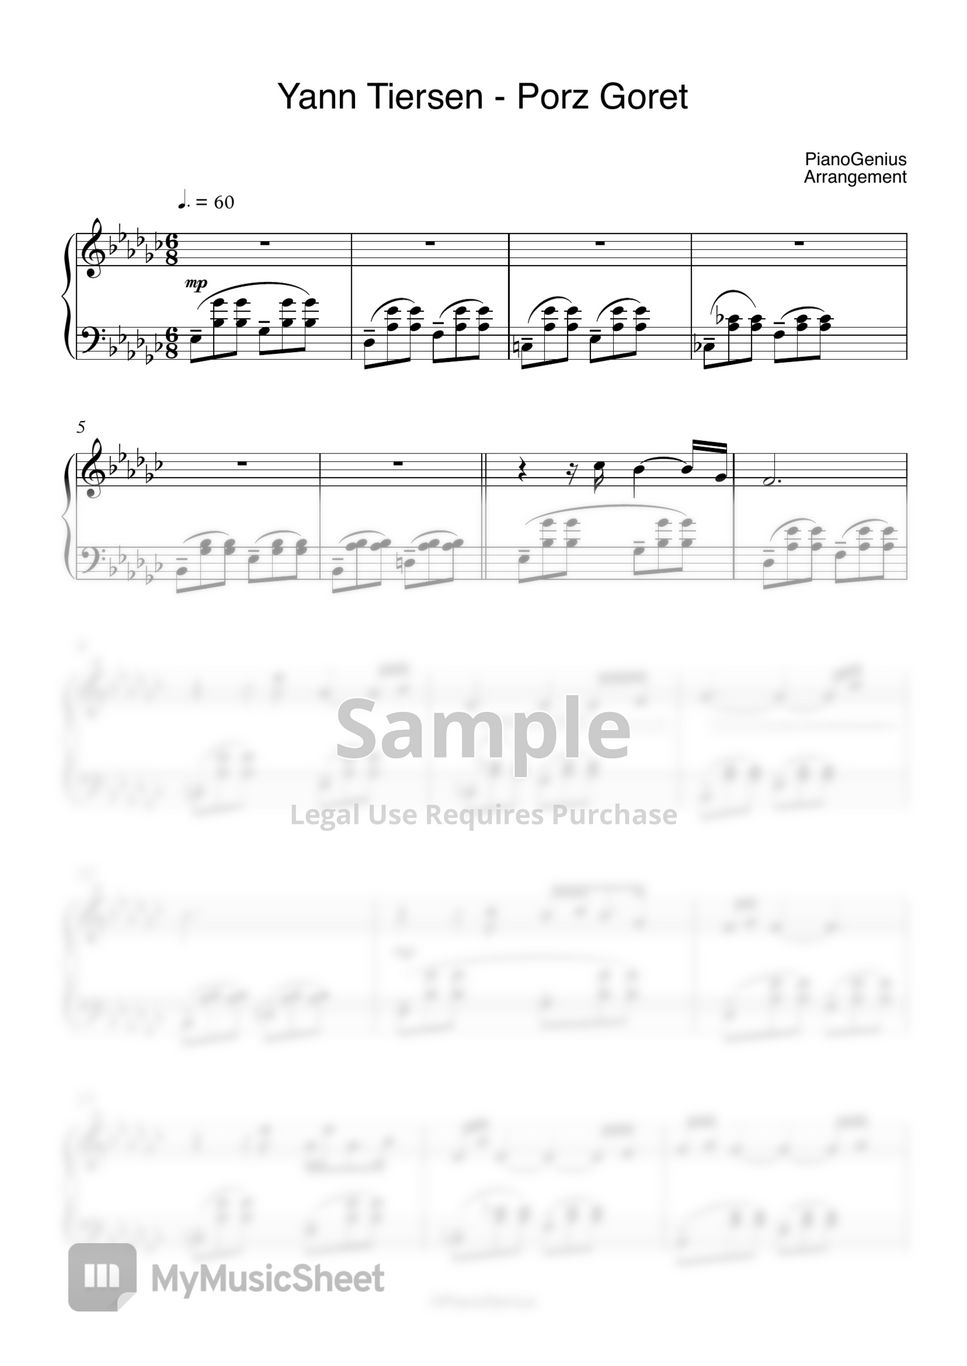 Yann Tiersen - Porz Goret by PianoGenius